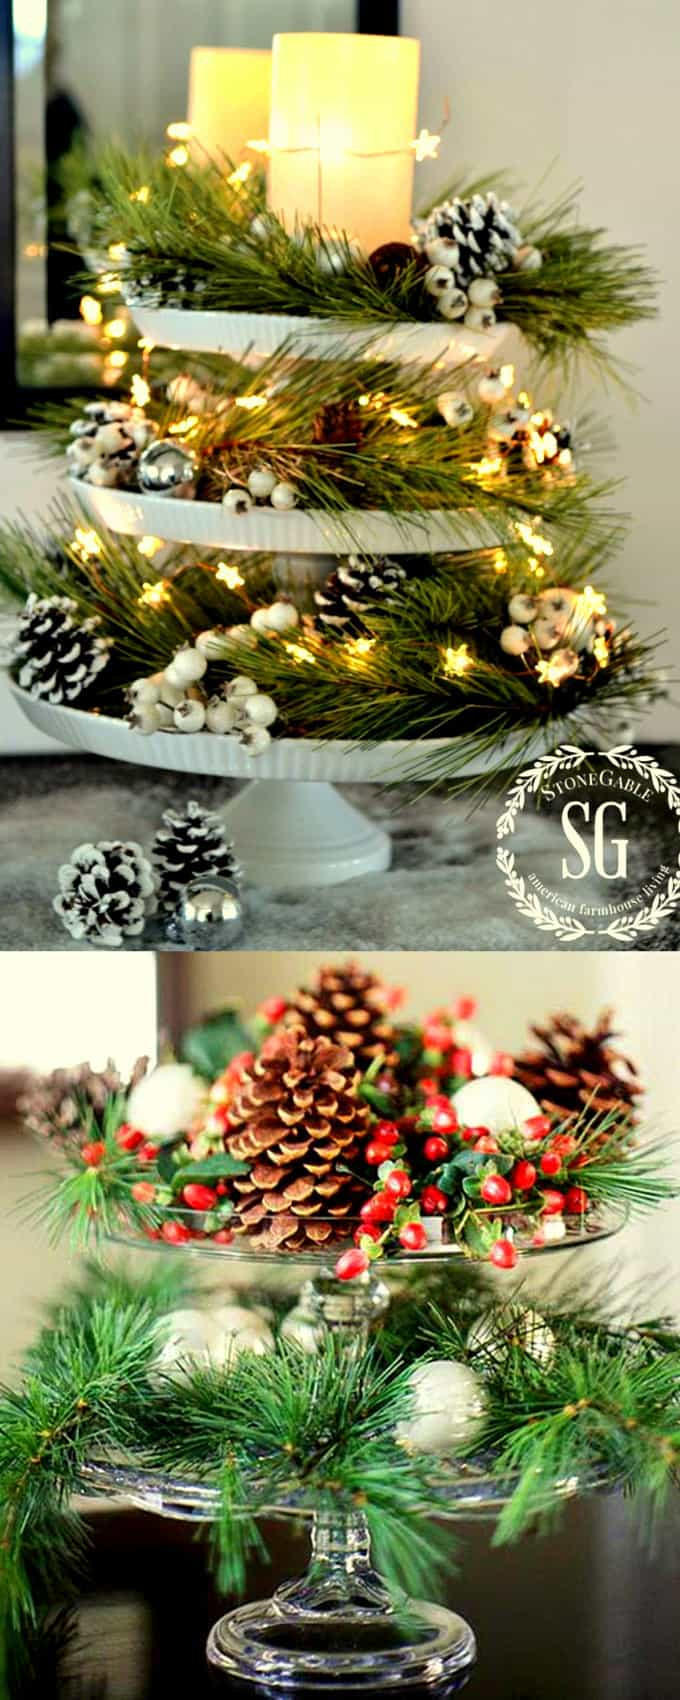 DIY Christmas Table Decorations
 27 Gorgeous DIY Thanksgiving & Christmas Table Decorations